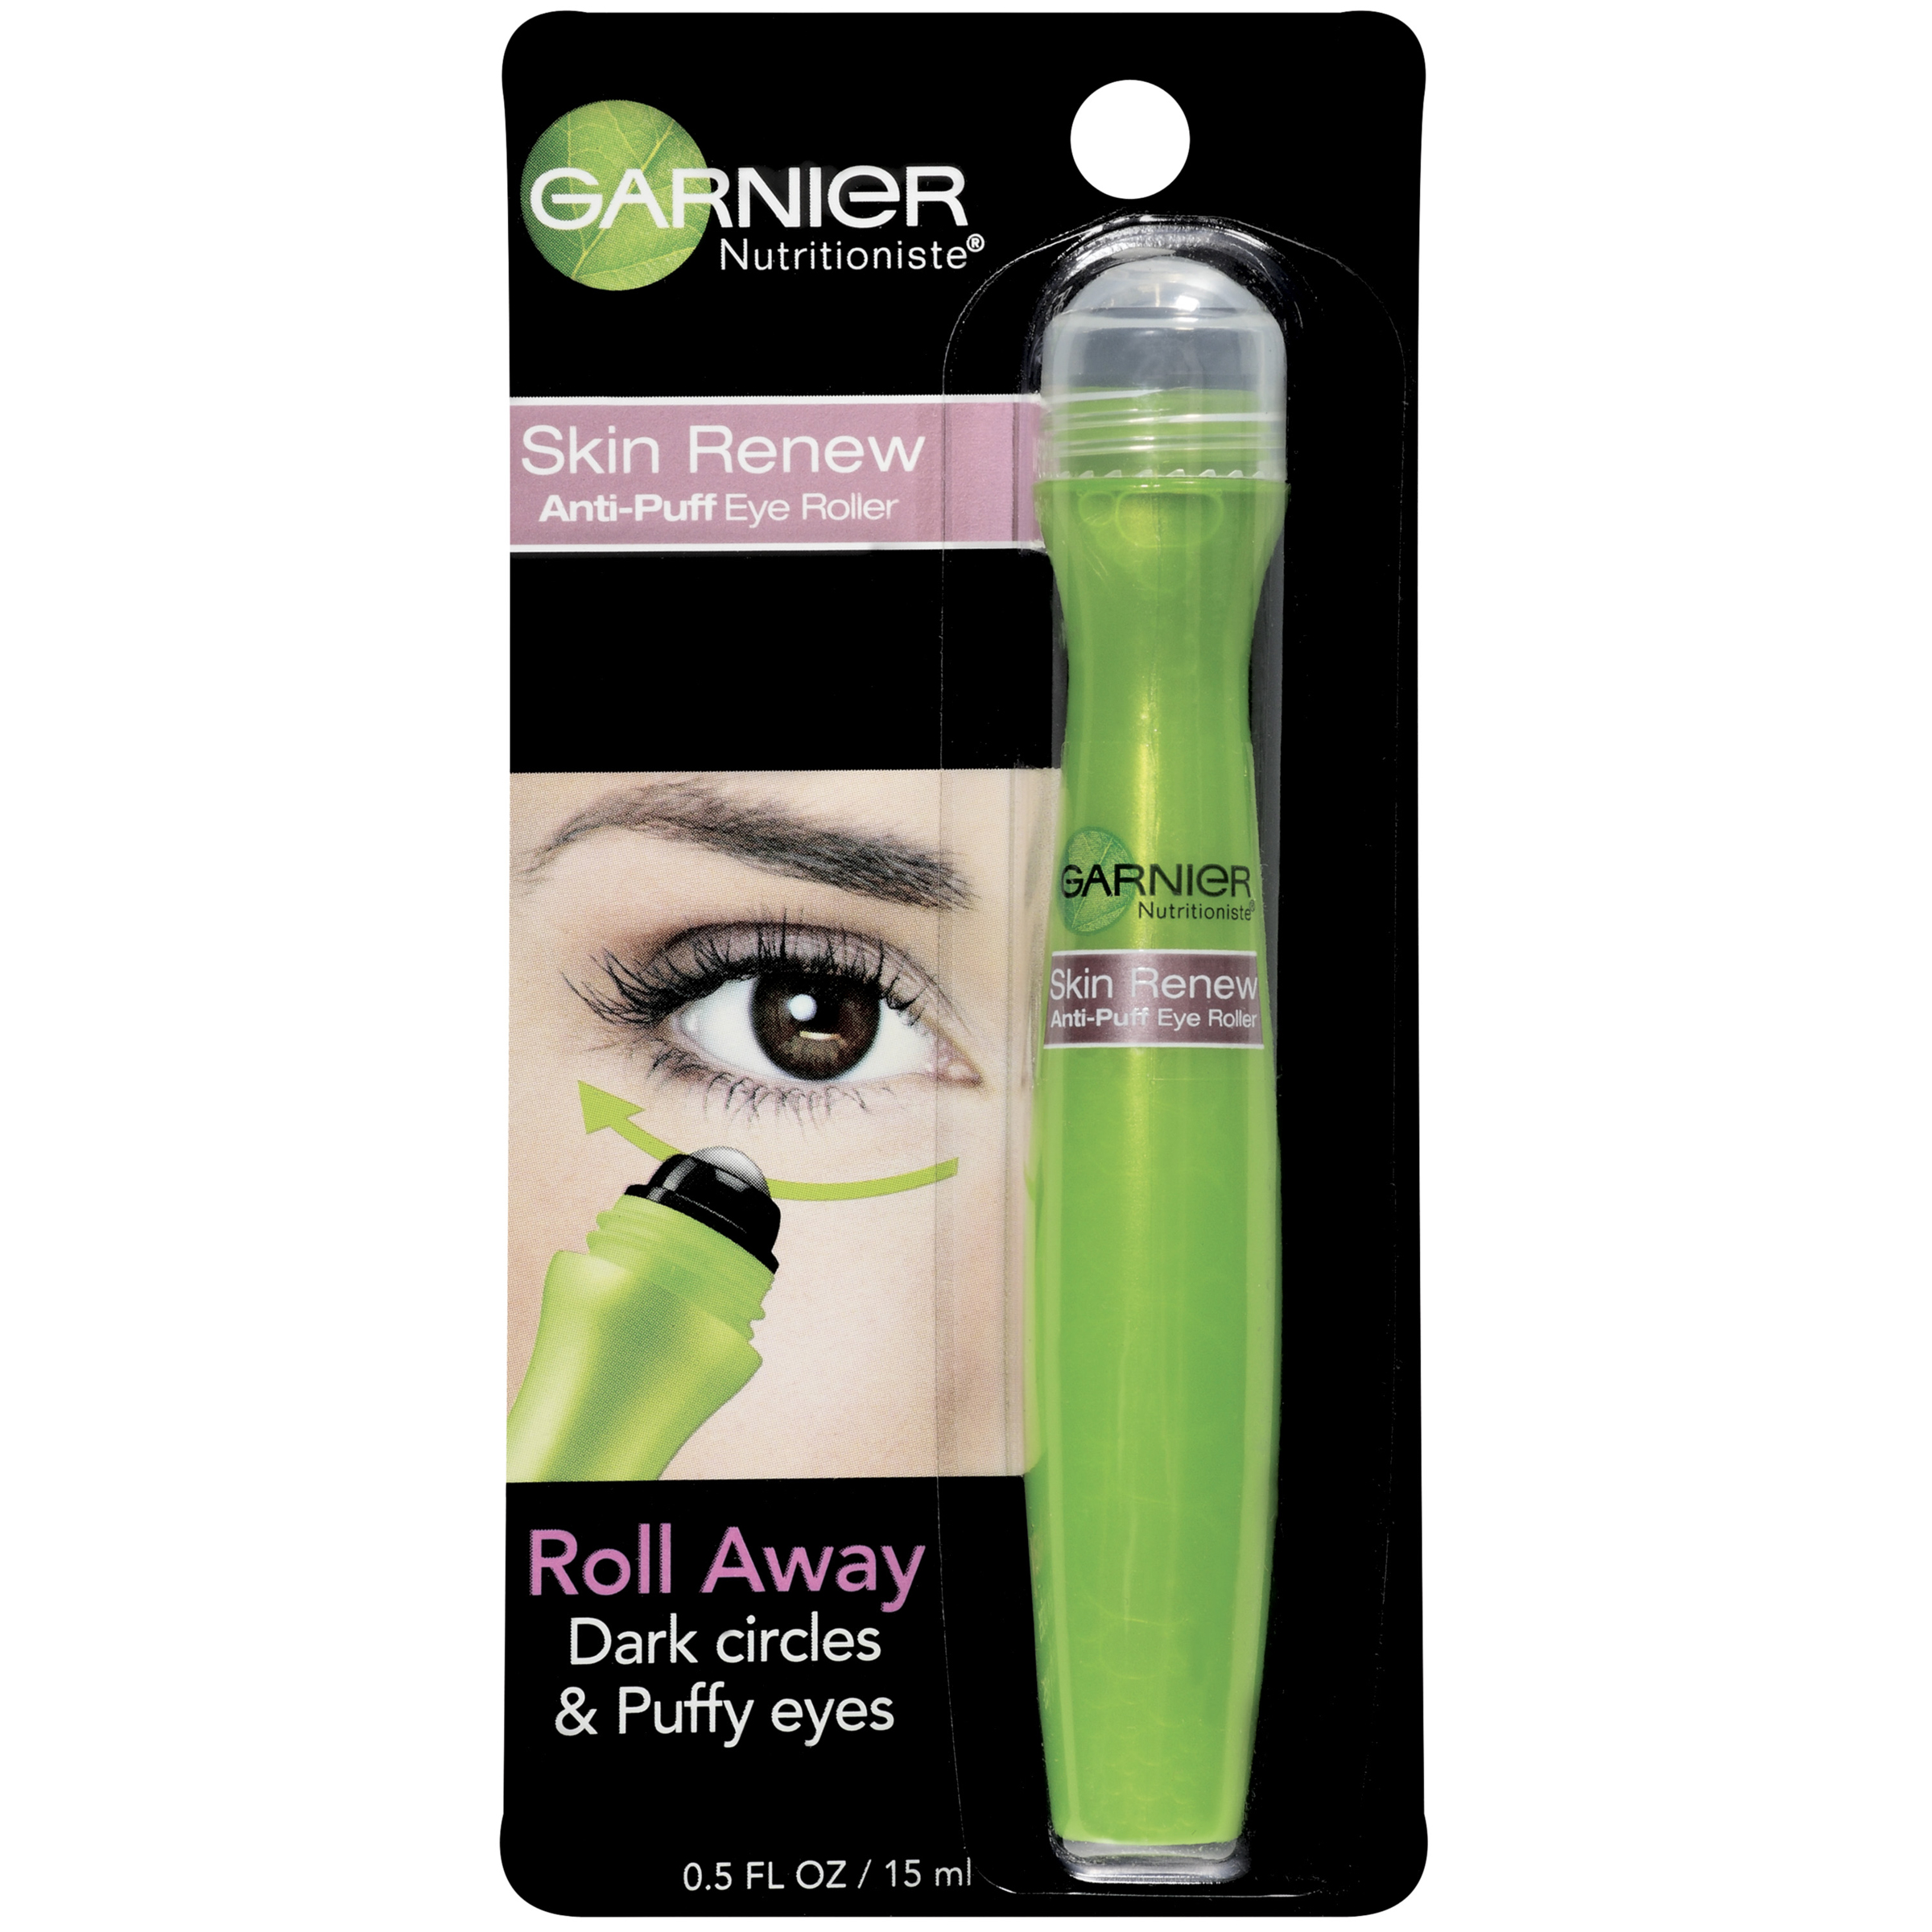 Garnier Nutritioniste Skin Renewal Eye Roller -.5 Ounce